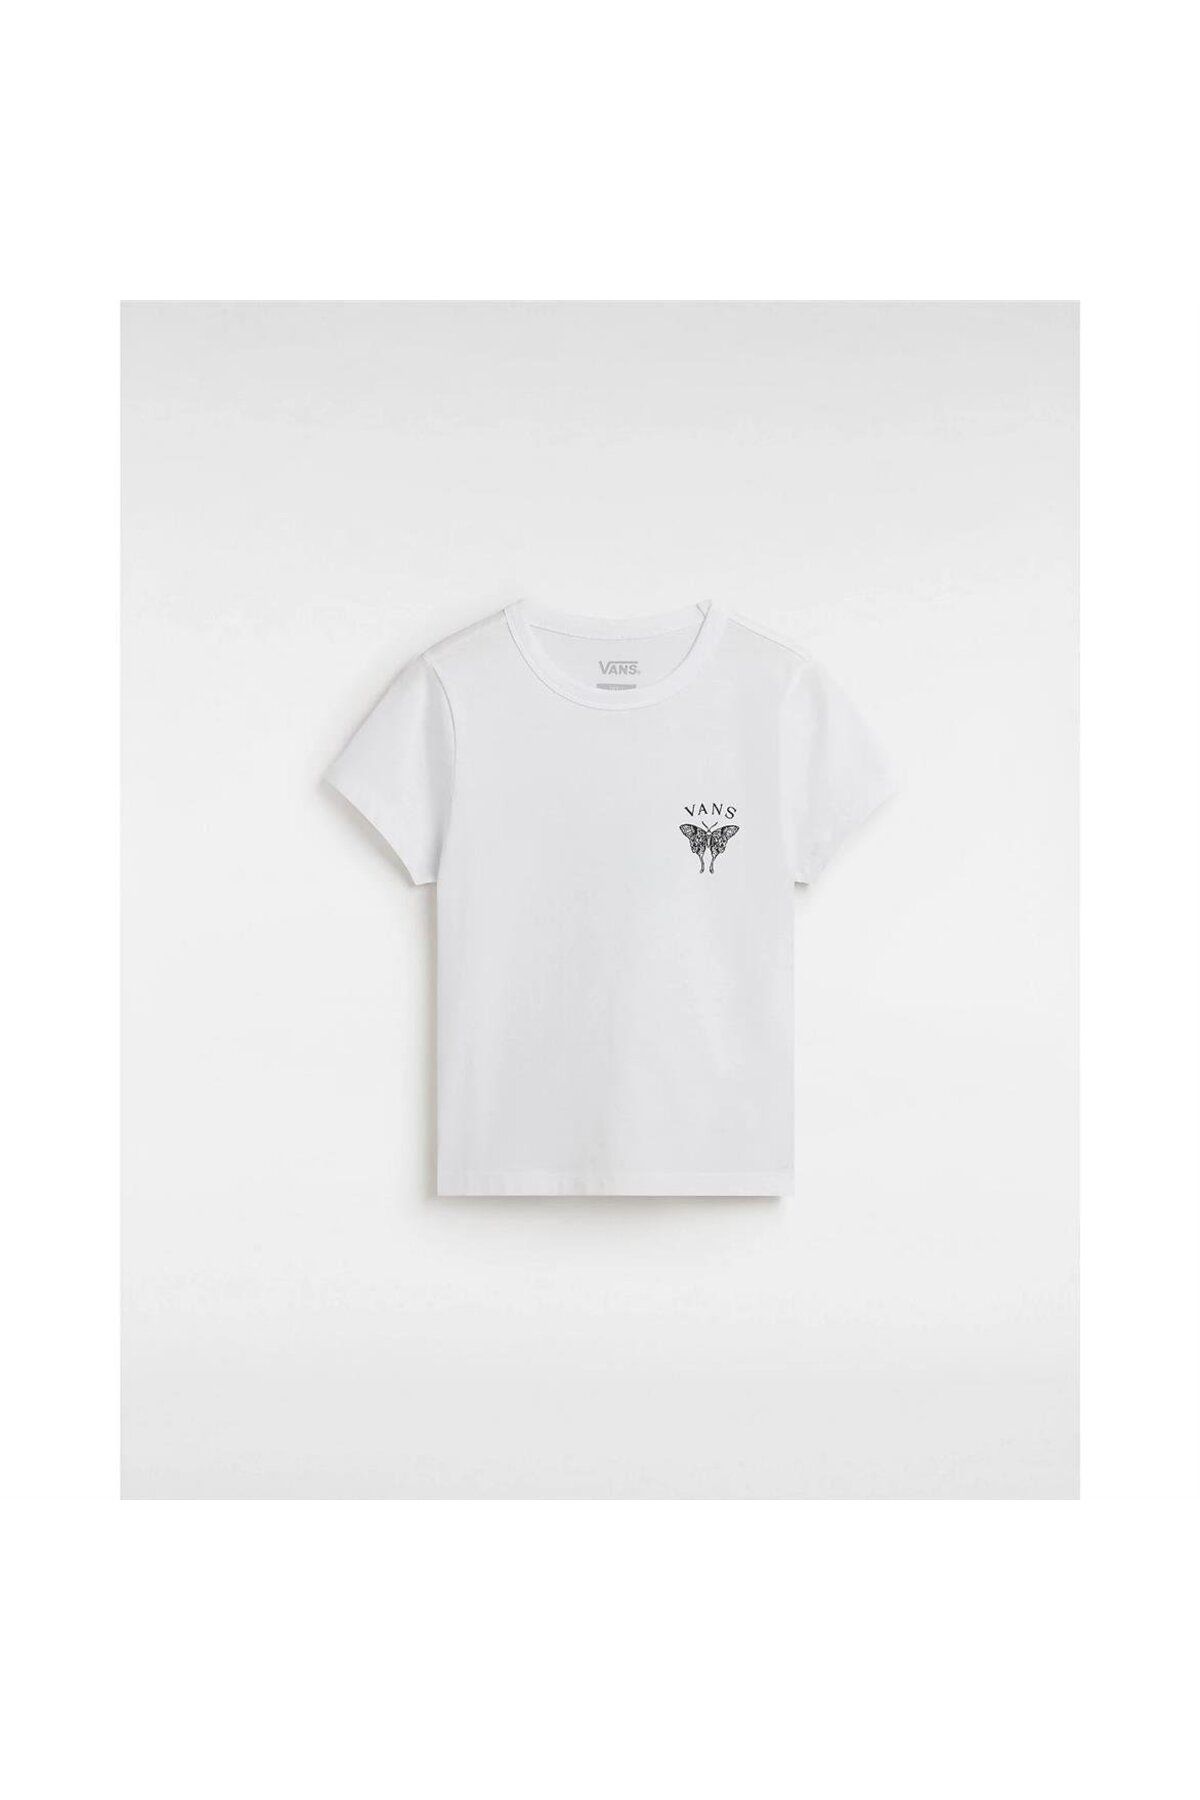 Vans Catchers Club Mını Beyaz Kadın T-shirt